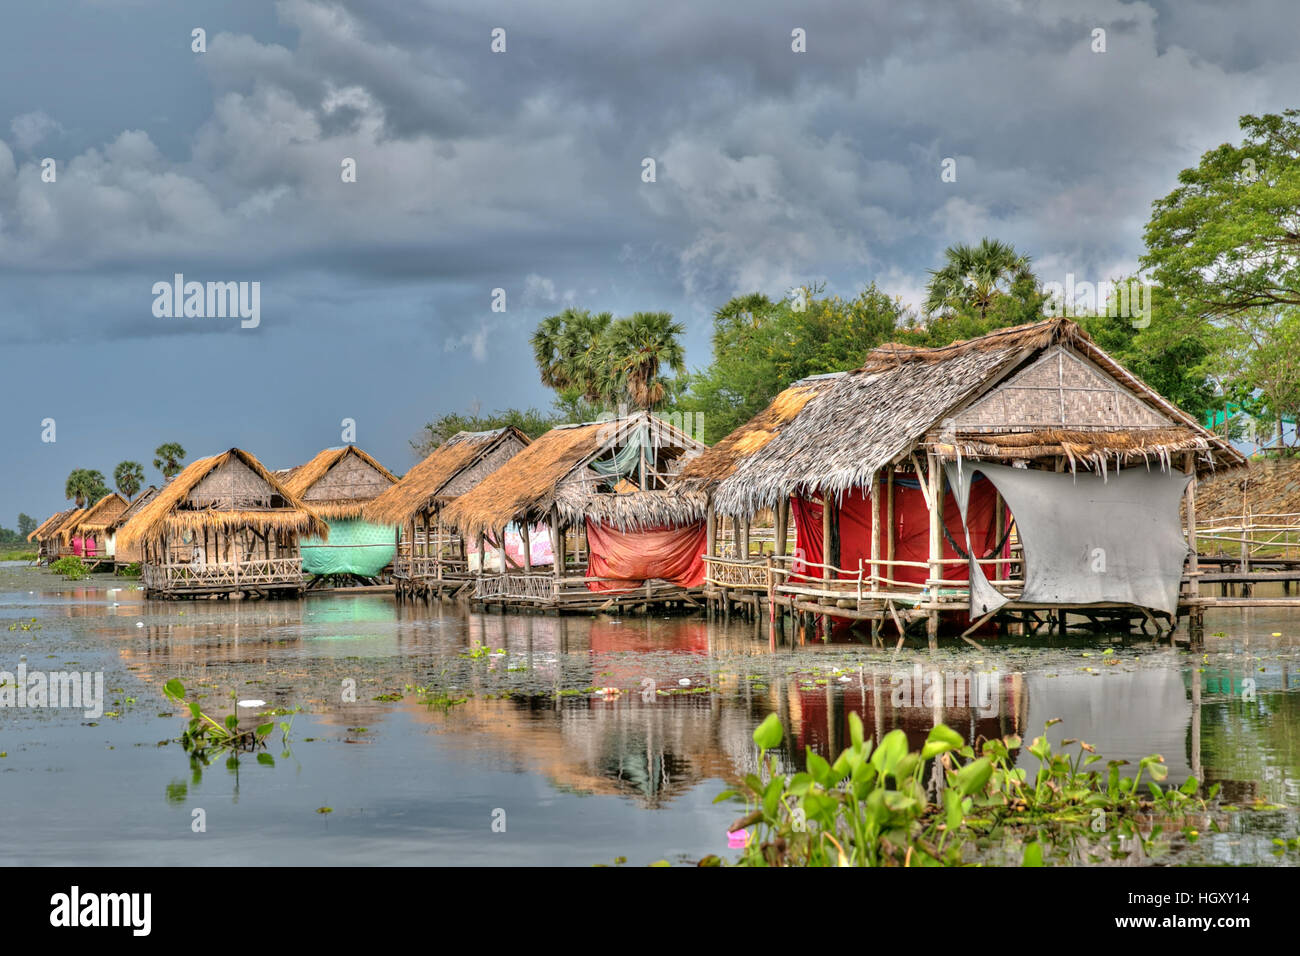 This idyllic scene was taken of a few houses on stilts reflected in Tonl (lake) Bati, Phnom Penh, Cambodia. Stock Photo